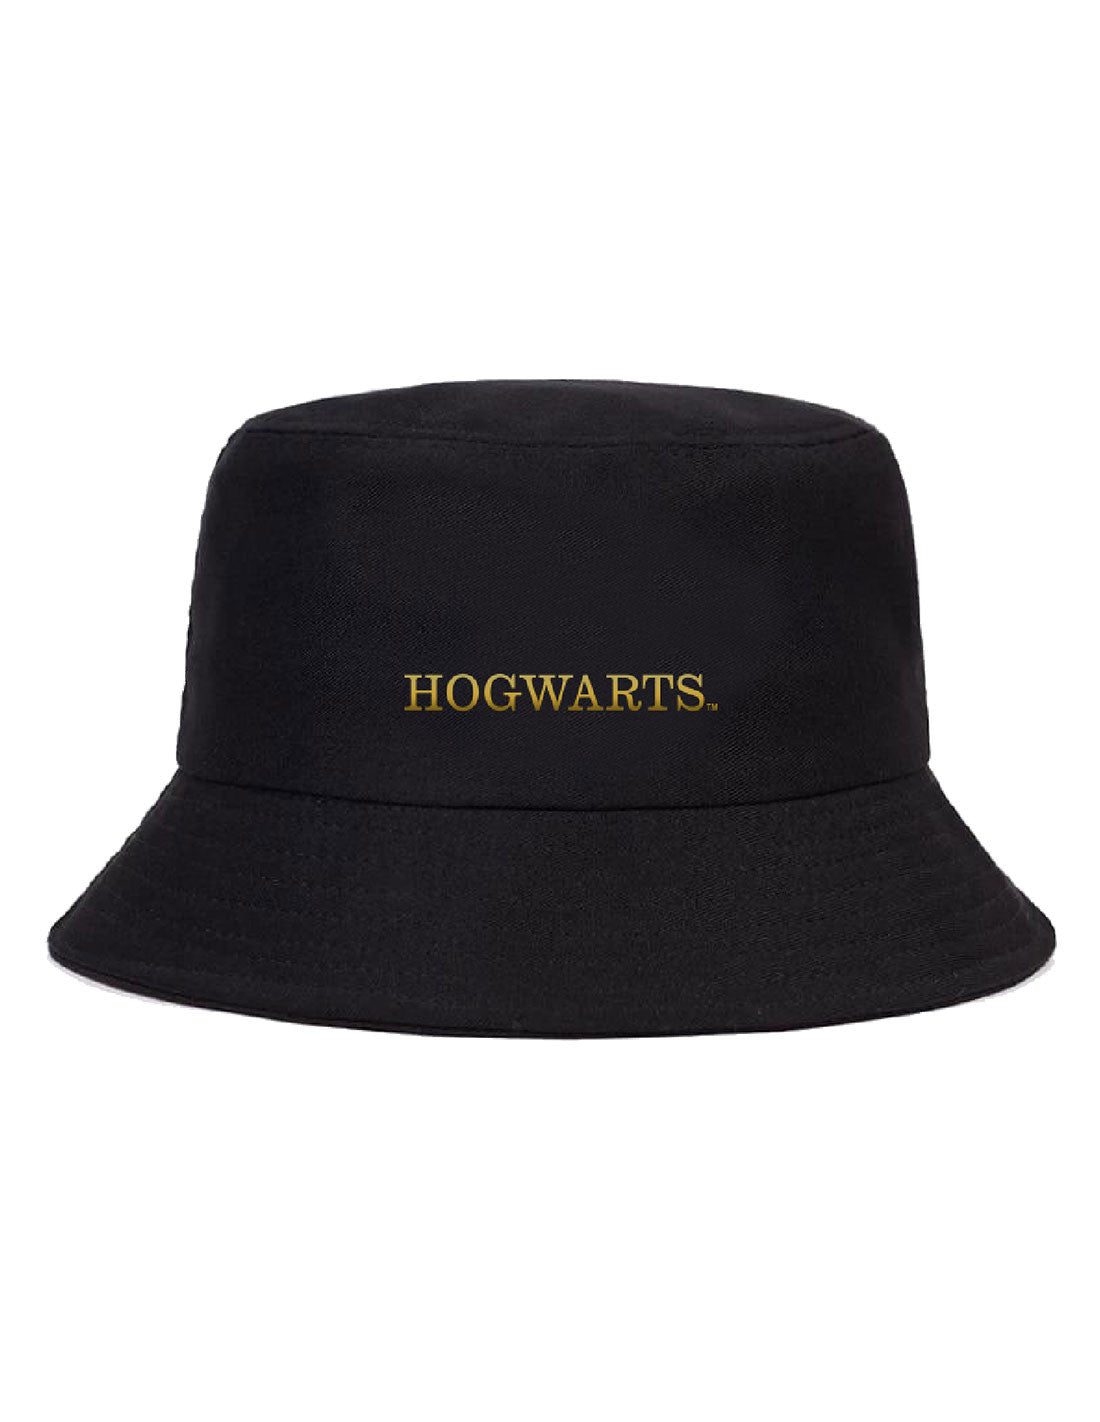 Bob Harry Potter - Hogwarts Pin 